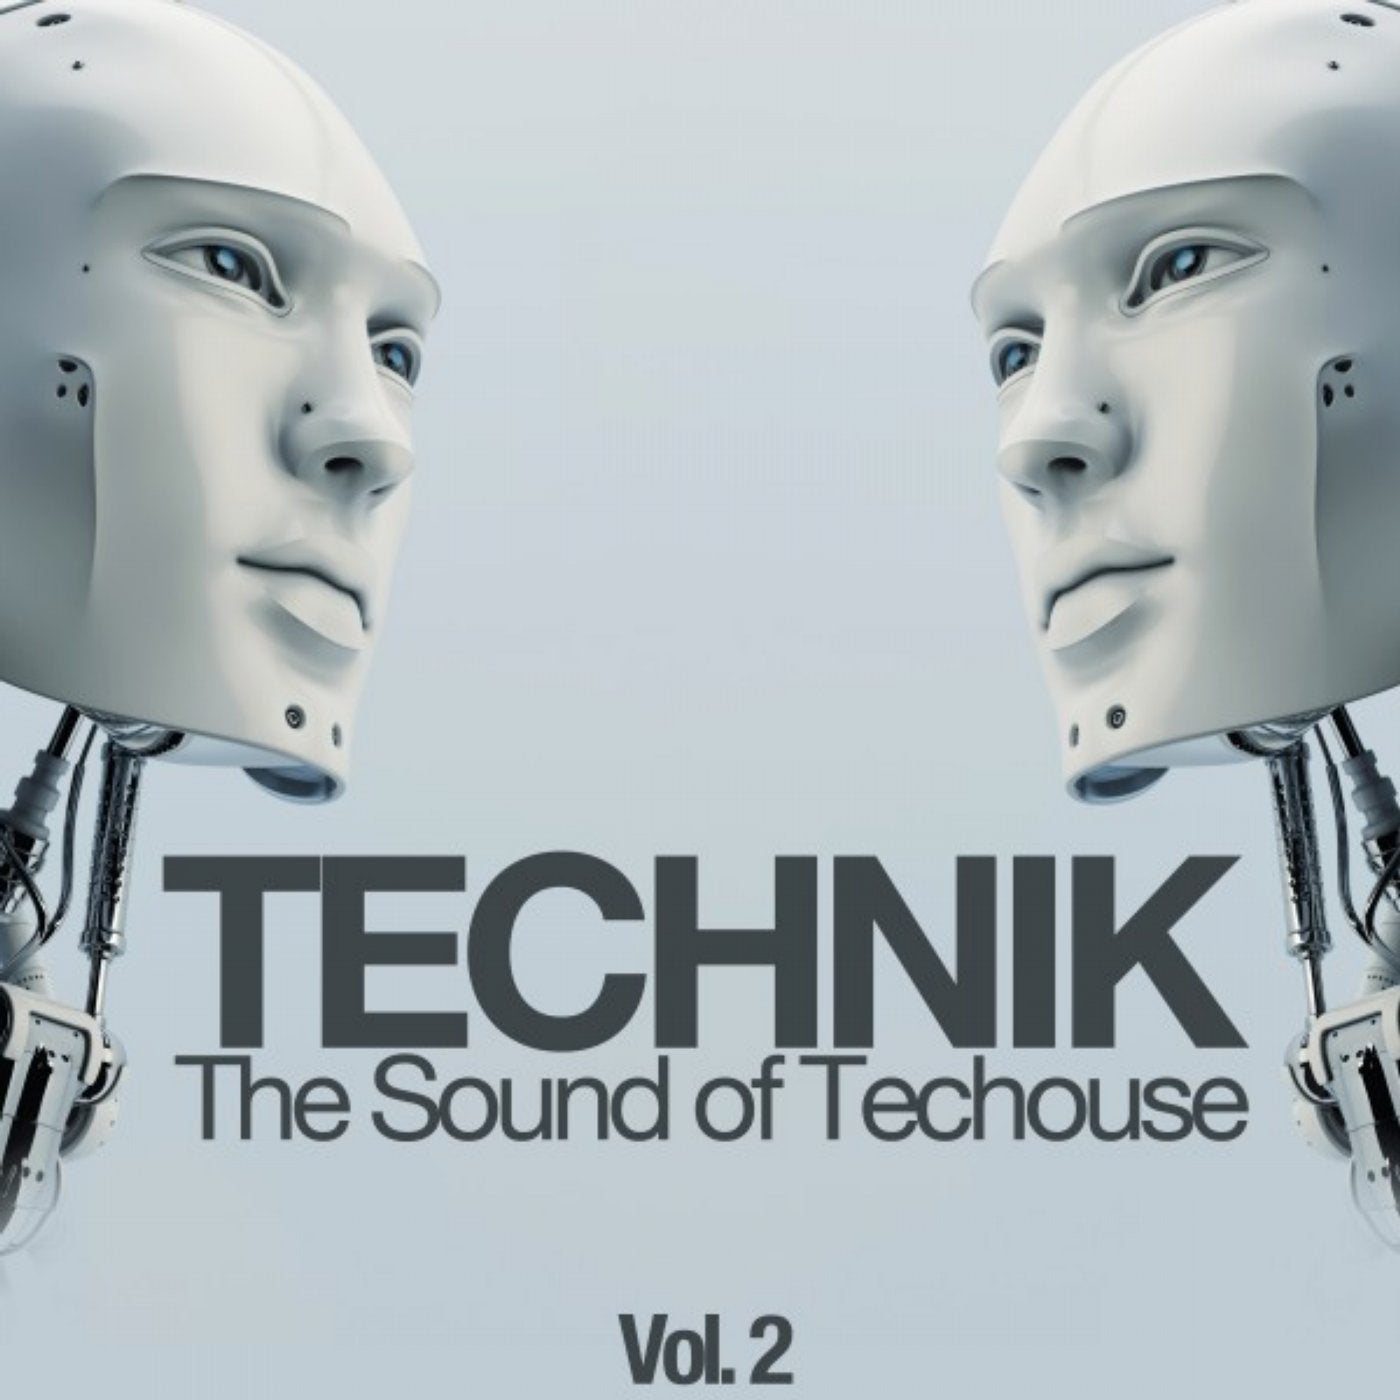 Technik, Vol. 2 (The Sound of Techouse)